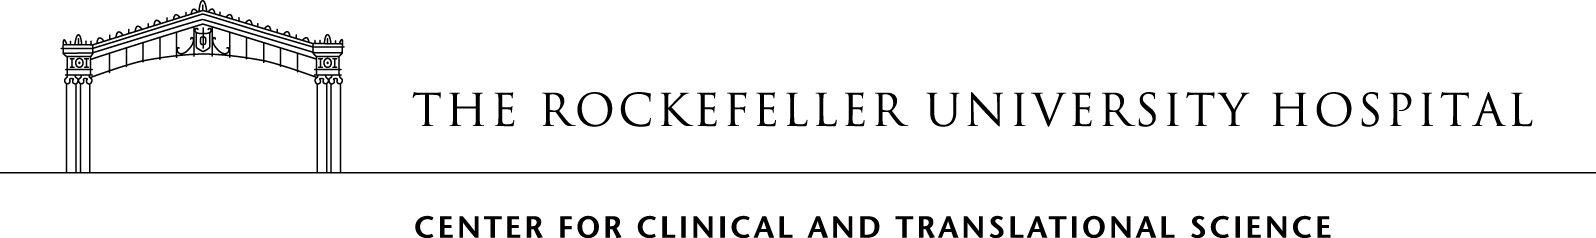 U of U Hospital Logo - The Rockefeller University Hospital » Hospital Communication Tools